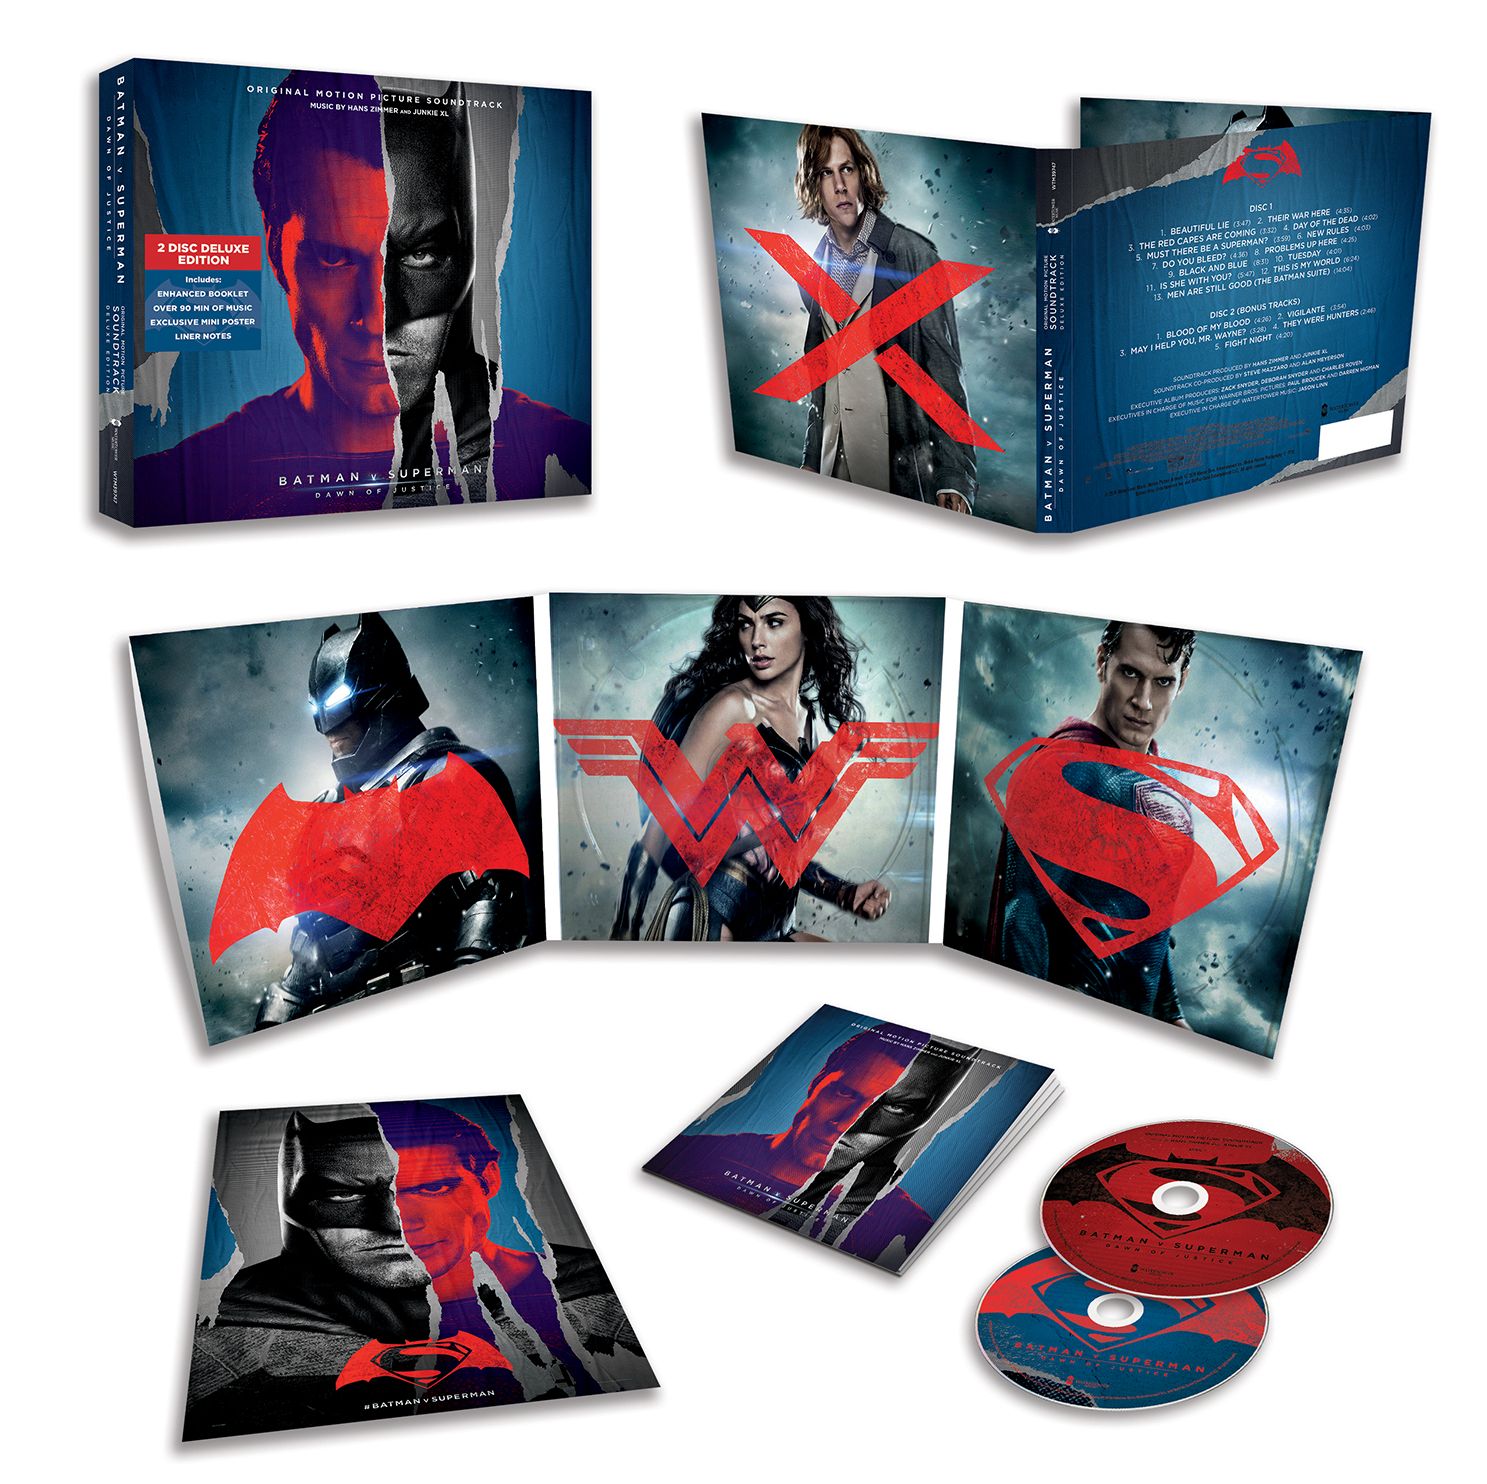 Batman v Superman Soundtrack Details Announced